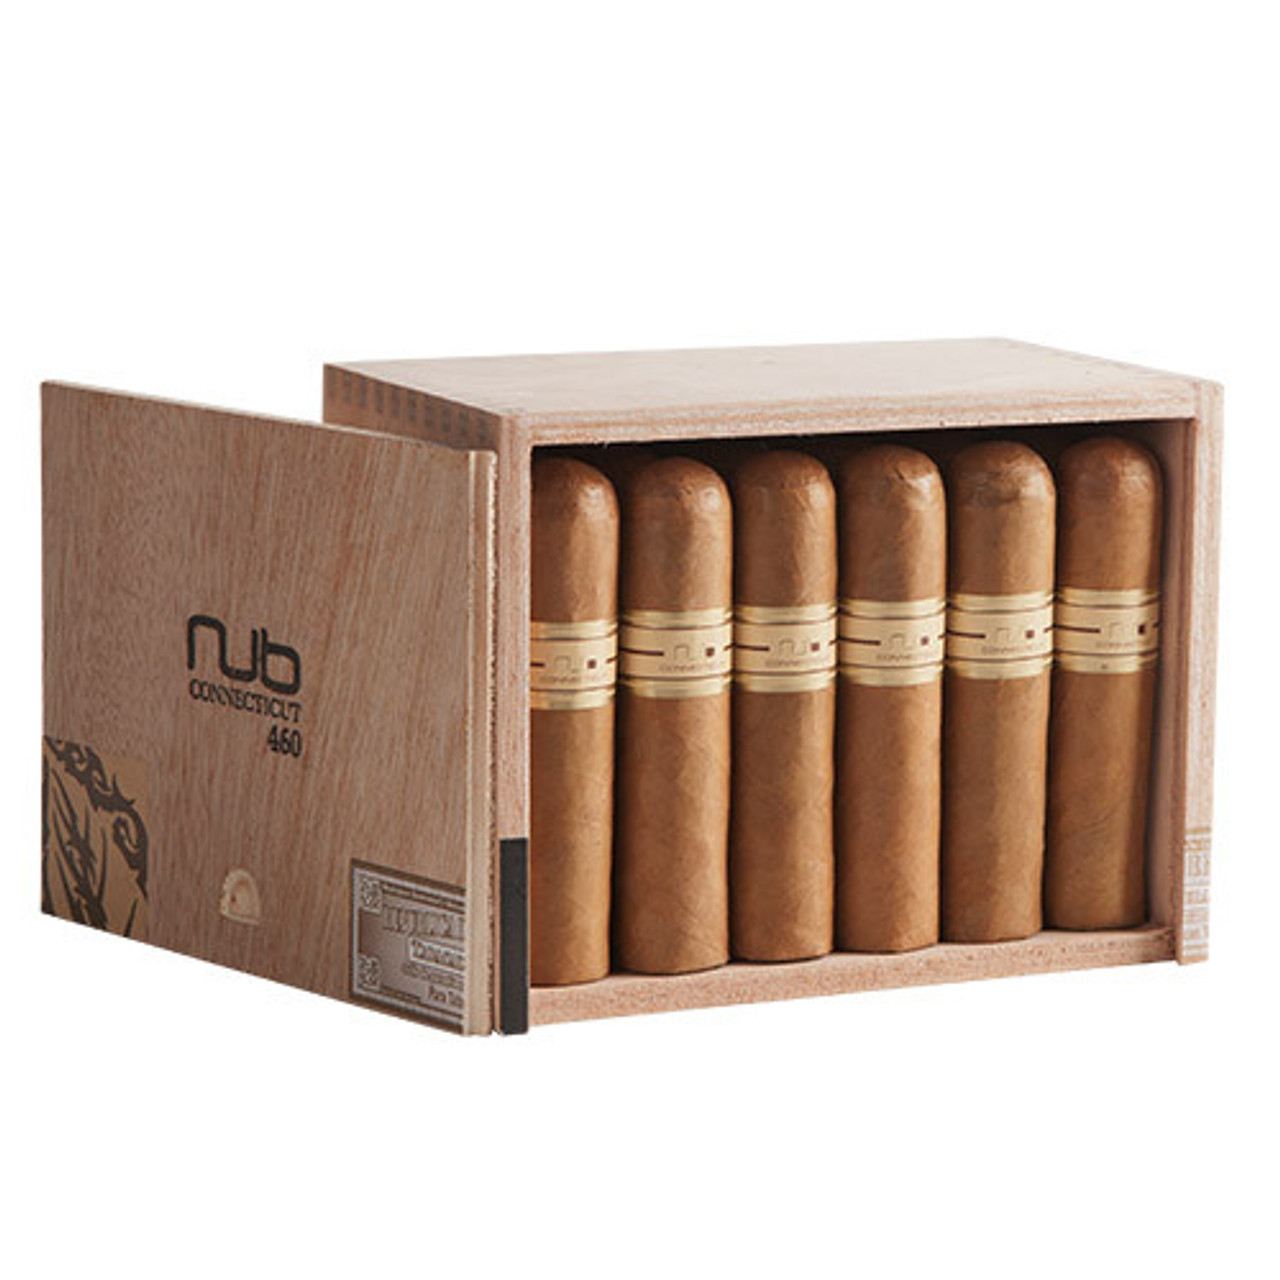 Nub 464 Maduro Torpedo Cigars - 4 x 64 (Box of 24) Open